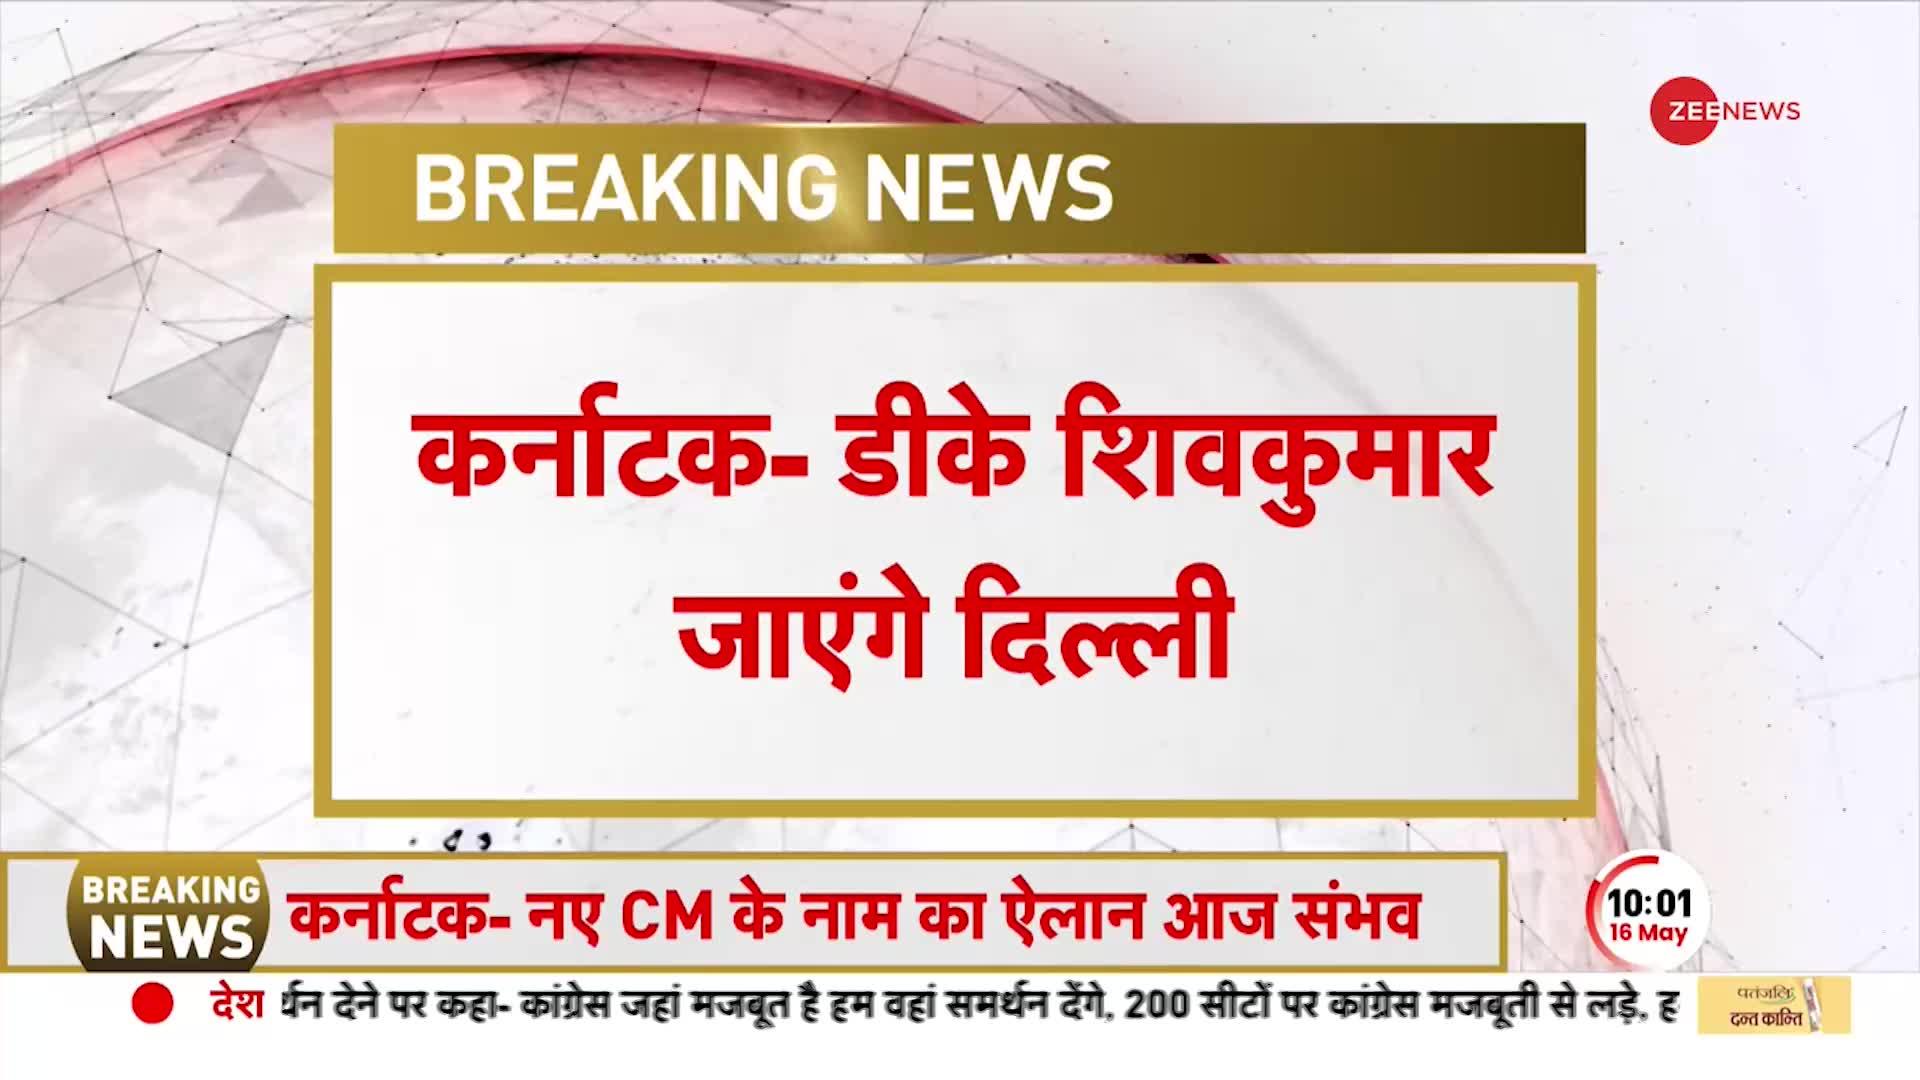 Karnataka CM Announcement: दिल्ली जाने पर DK Shivakumar बोले, 'मैं योग्य हूं तो जिम्मेदारी मिलेगी'